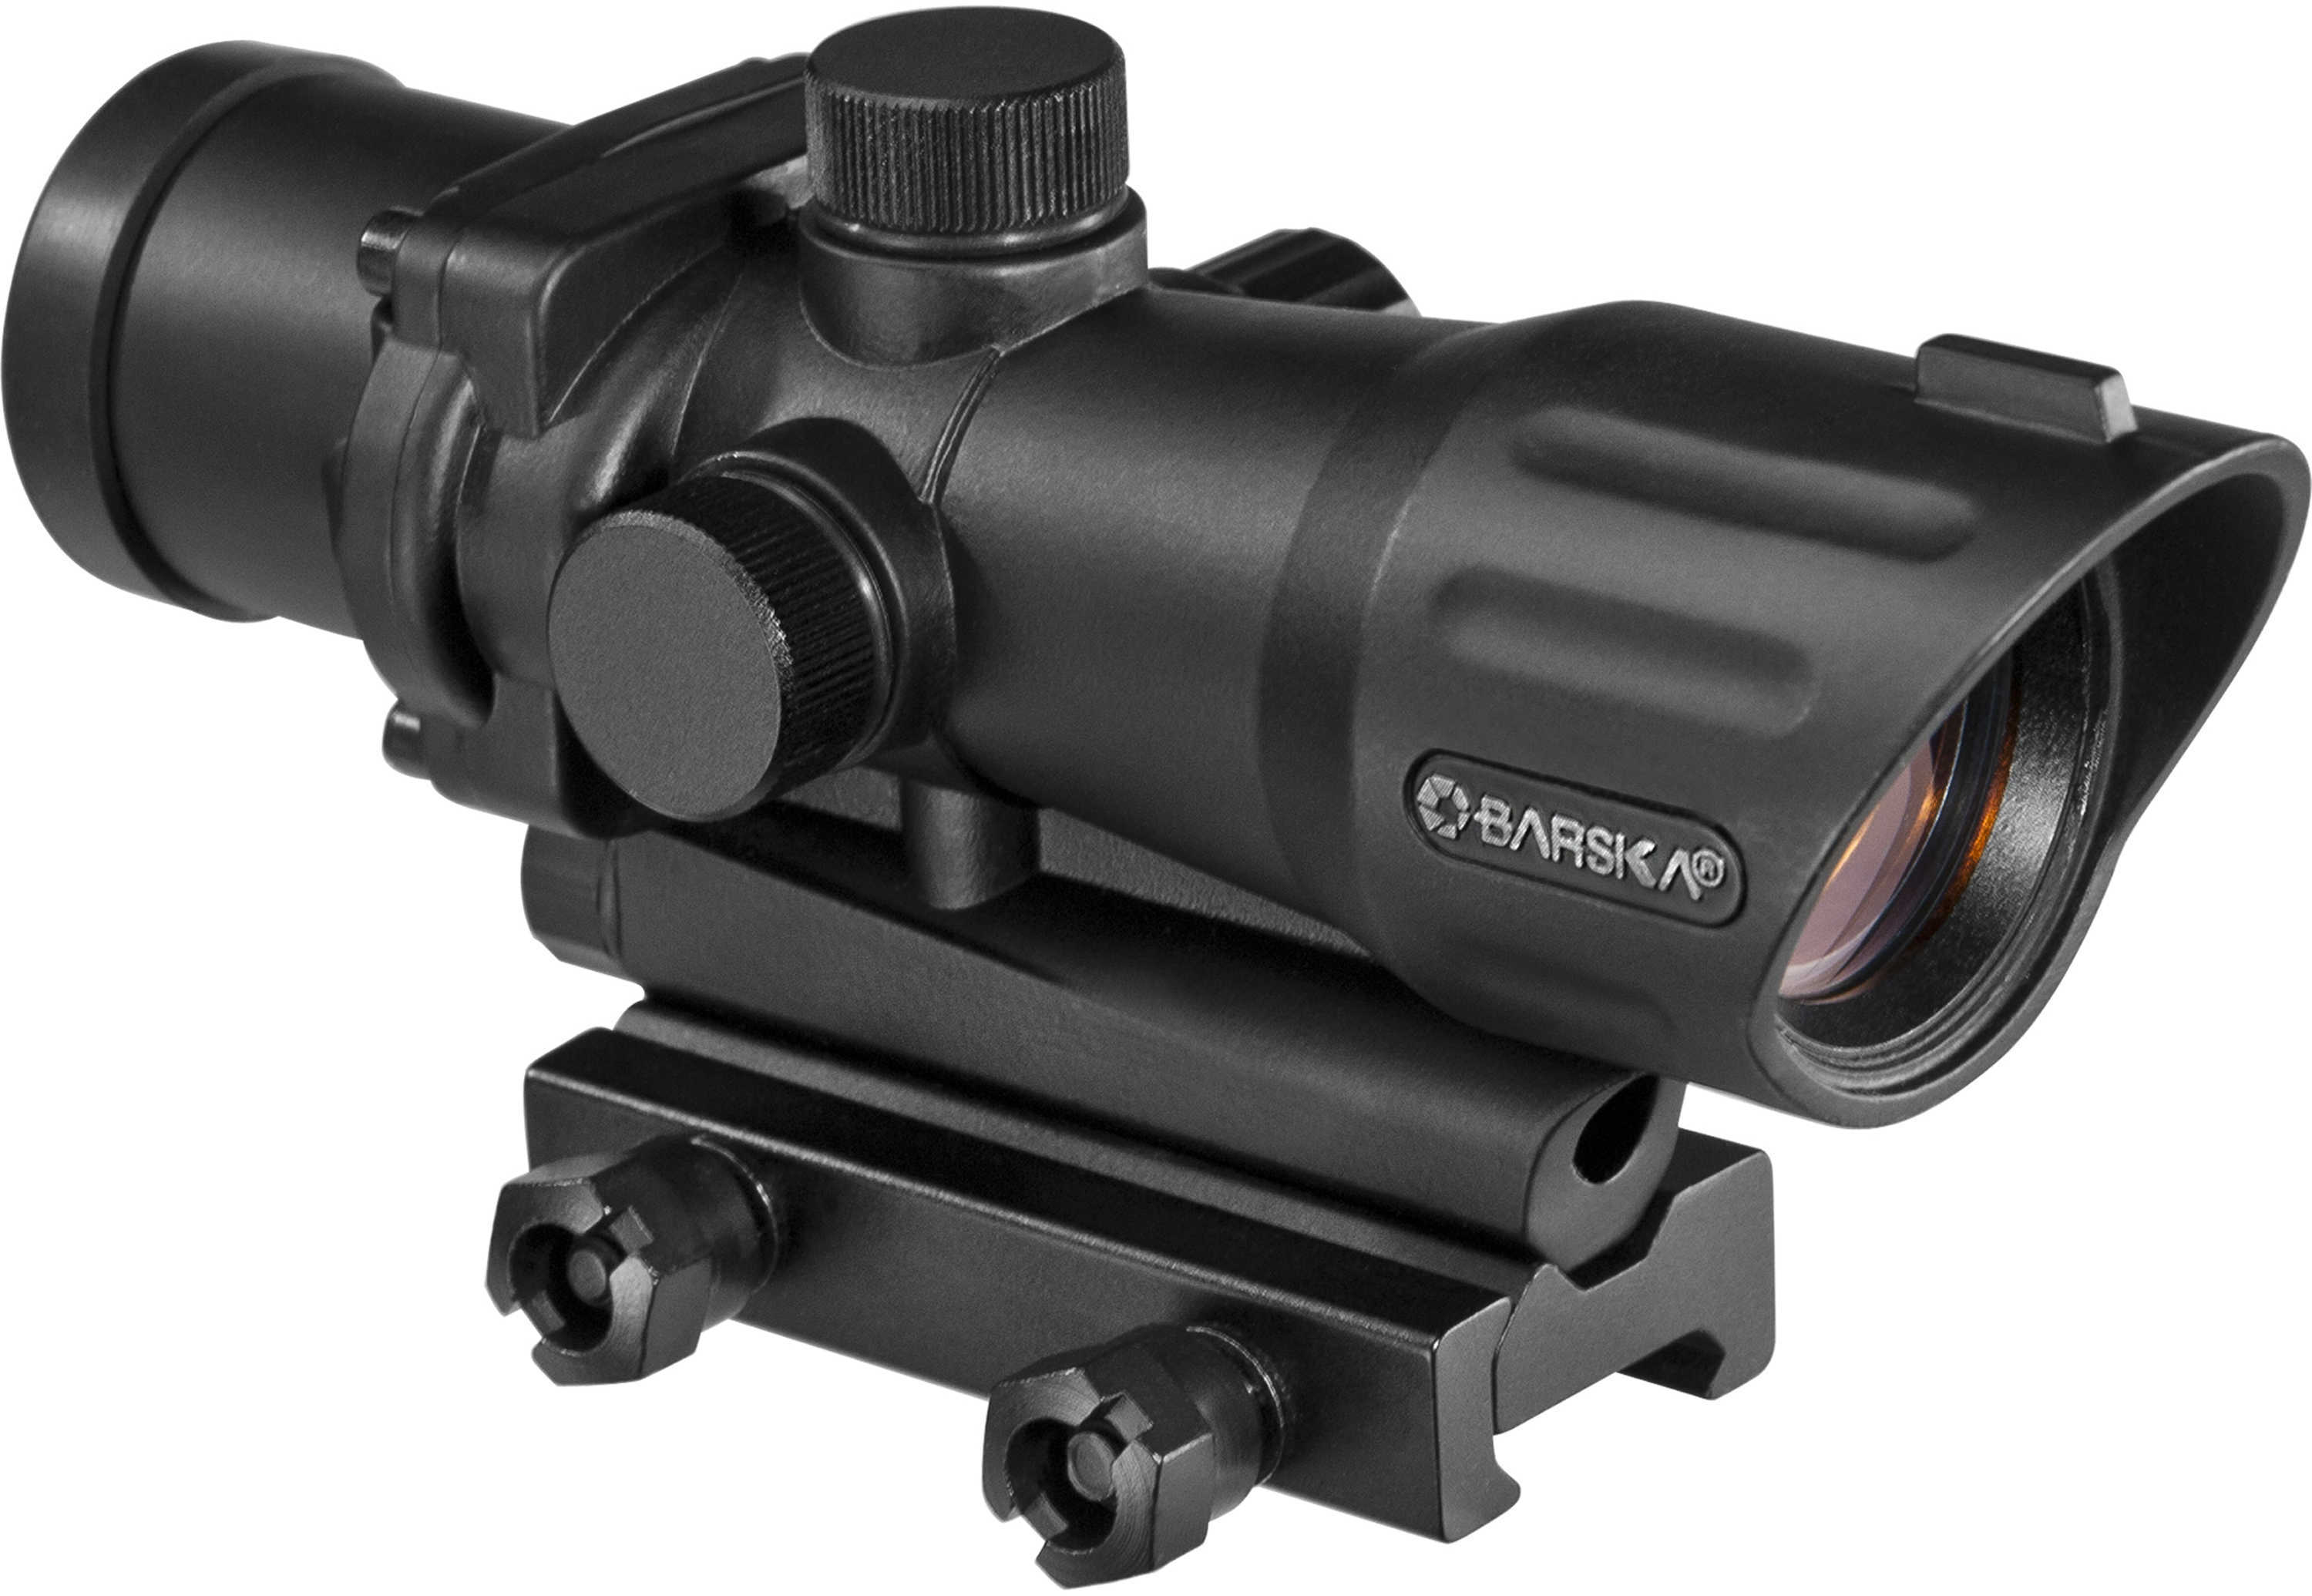 Barska Optics 1X30 IR AR-15/M16 Electro Sight Tactical Scope Md: AC10984